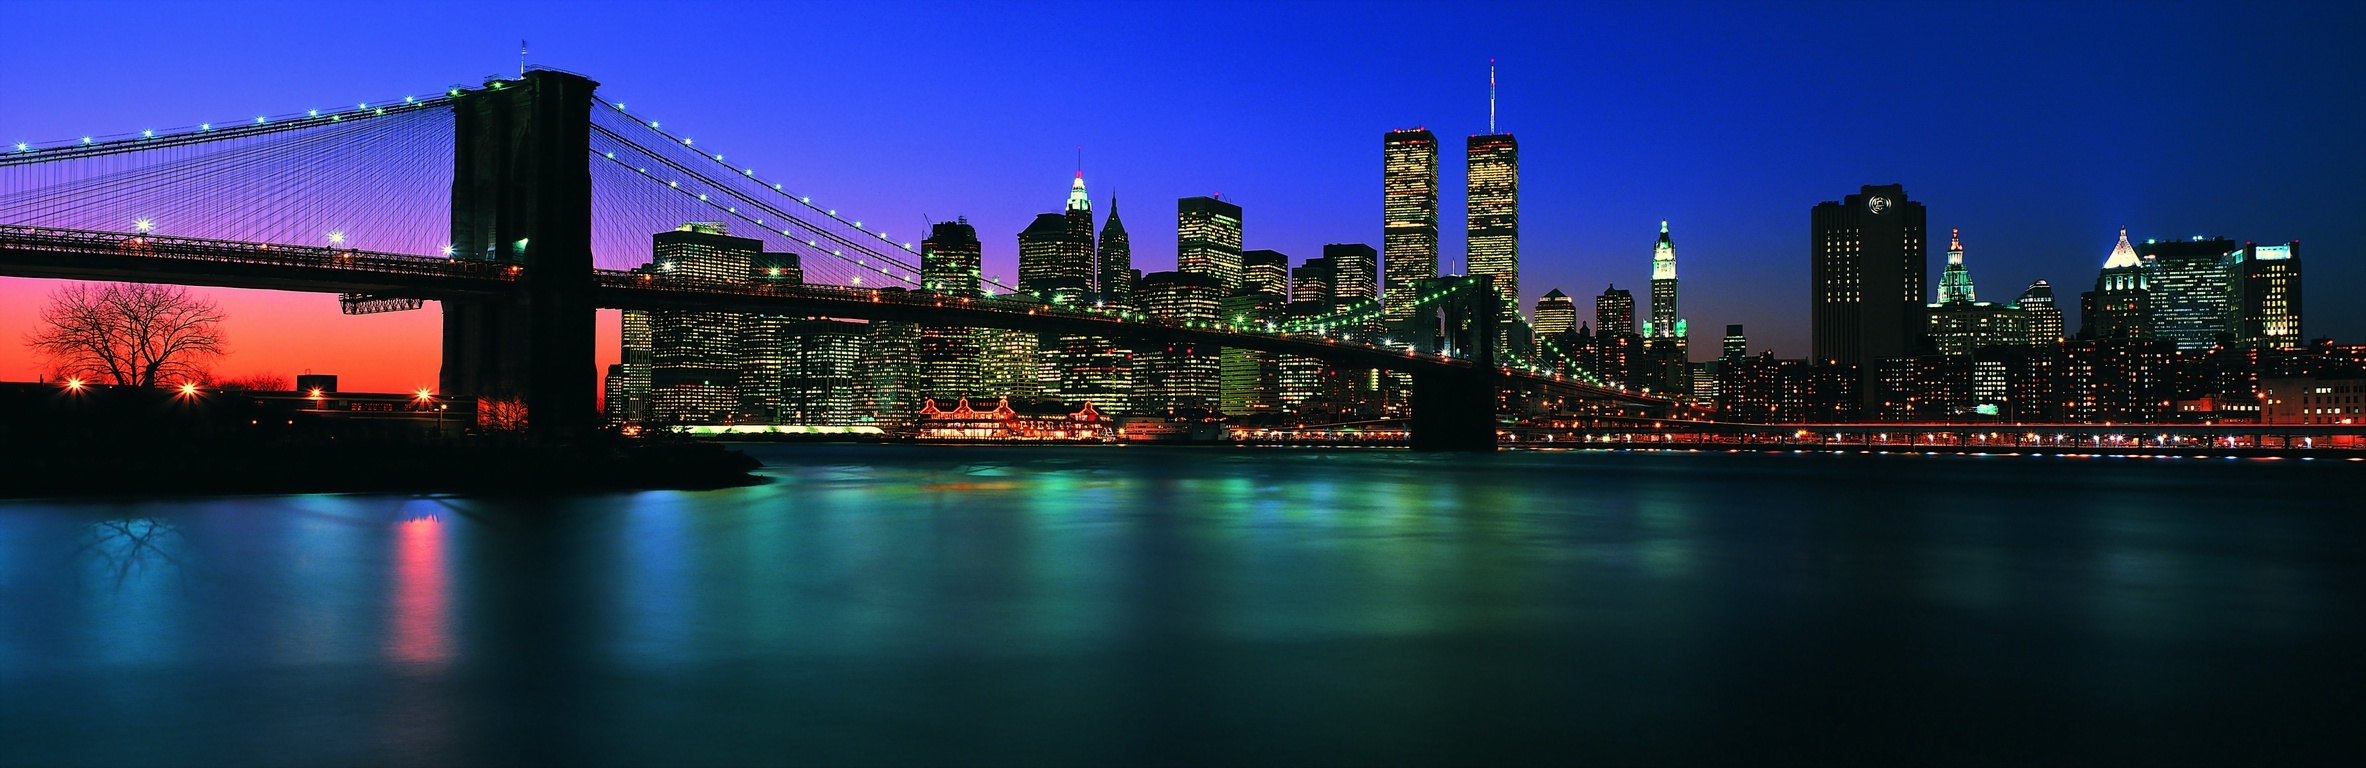 Free New York City Brooklyn Bridge panorama night lights USA America HD Desktop wallpapers backgrounds wall murals downloads A11